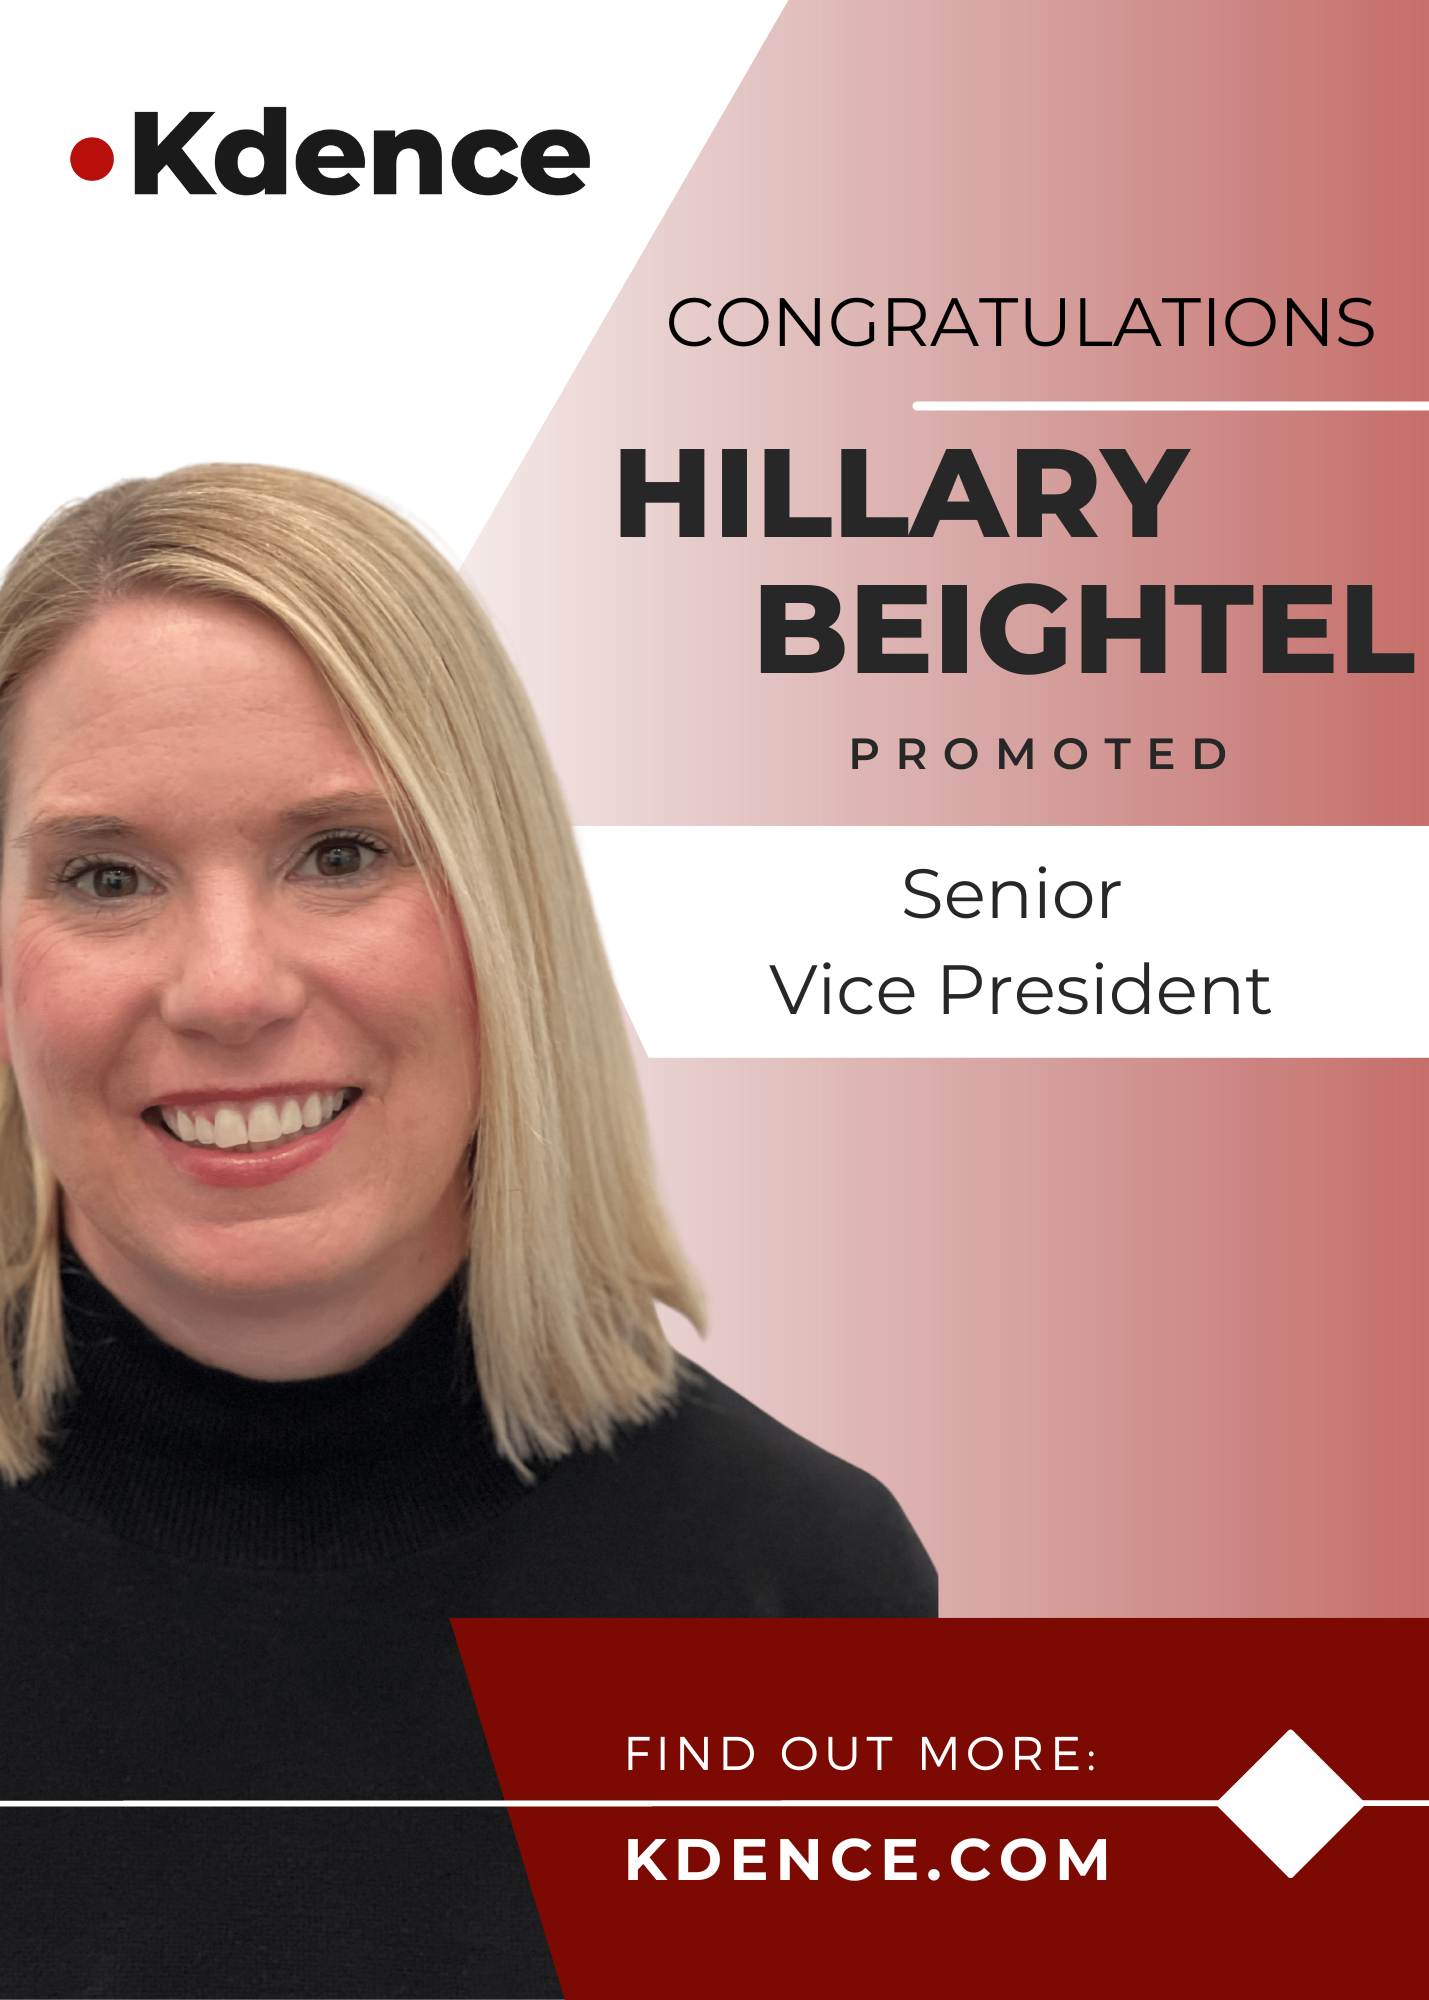 Congratulations, Hillary Beightel, promoted Senior Vice President